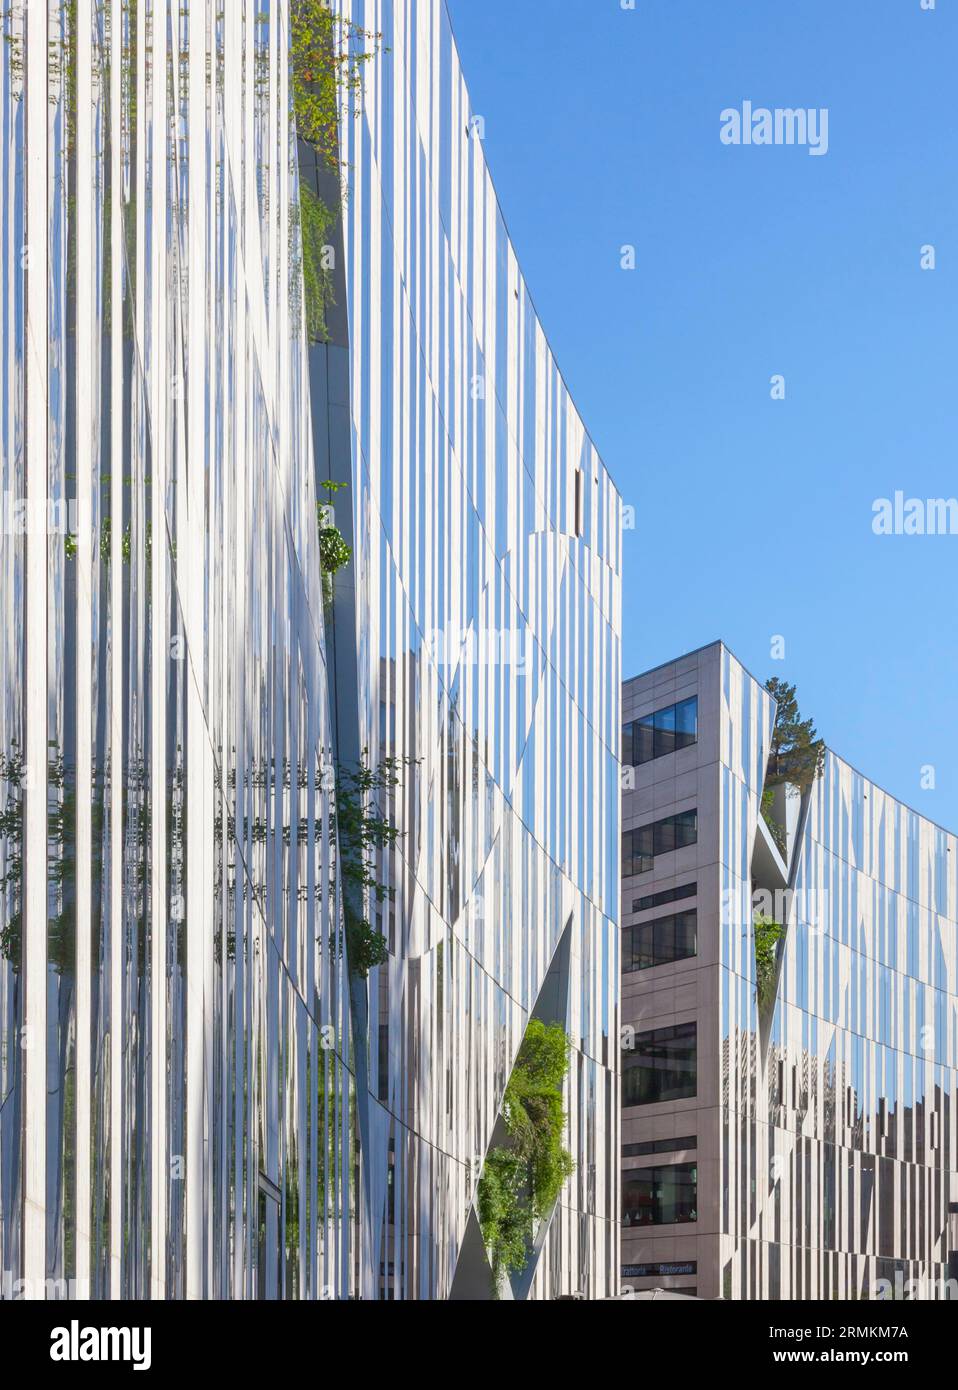 Allemagne, Duesseldorf, Koe-Bogen Architecture par Daniel Libeskind Banque D'Images